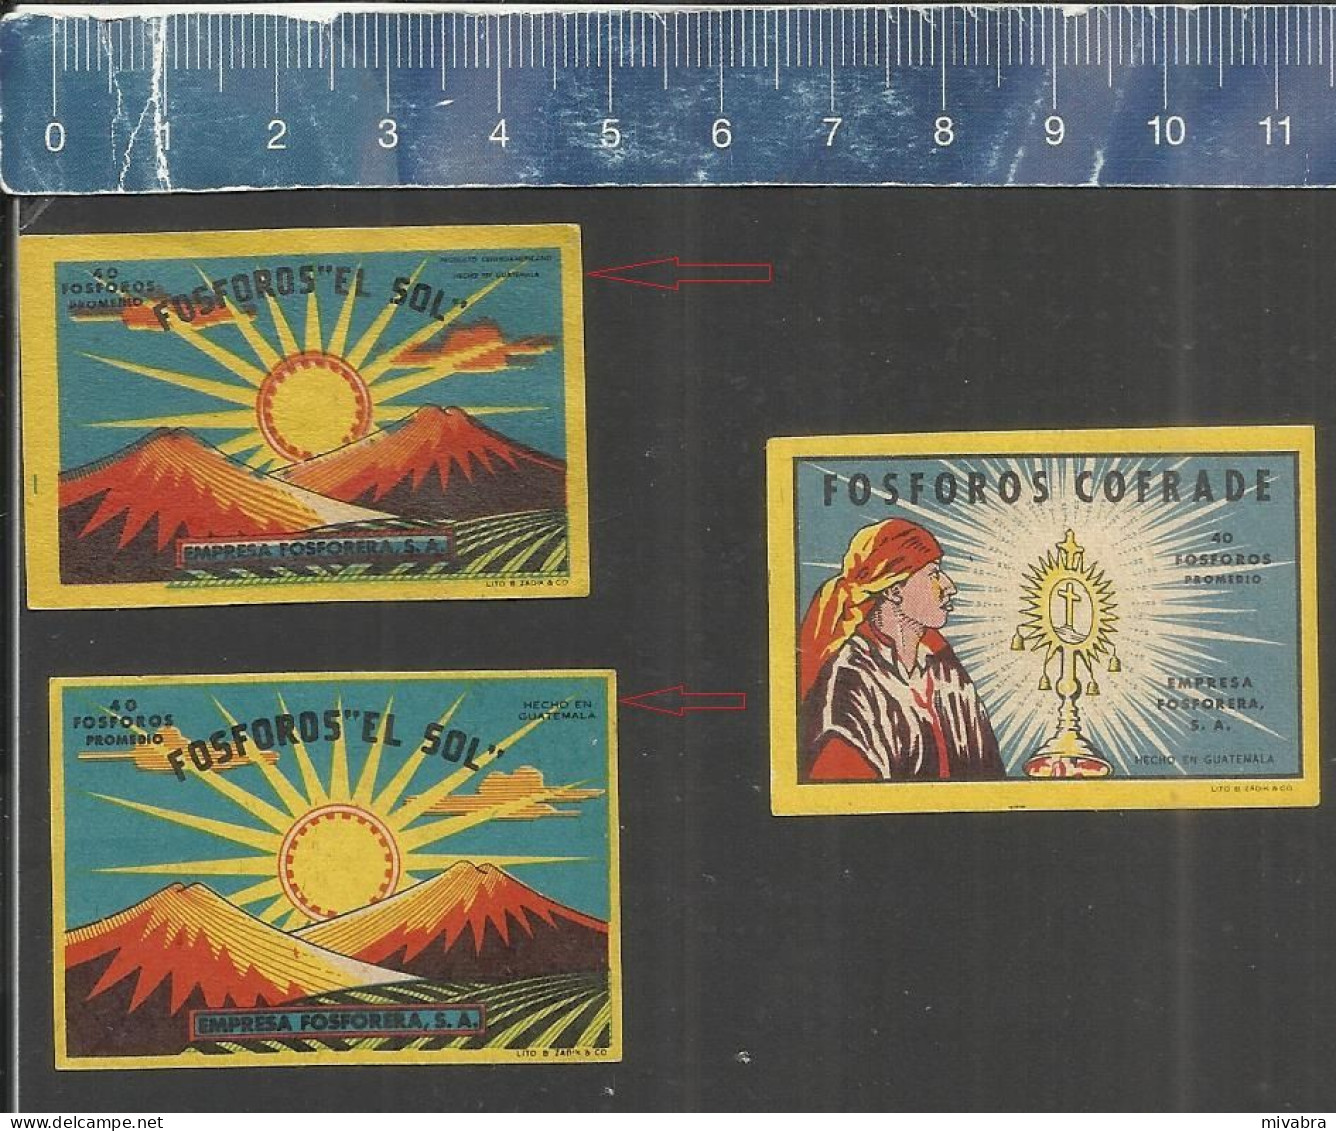 FOSFOROS EL SOL & COFRADE - OLD MATCHBOX LABELS MADE IN GUATEMALA - Luciferdozen - Etiketten